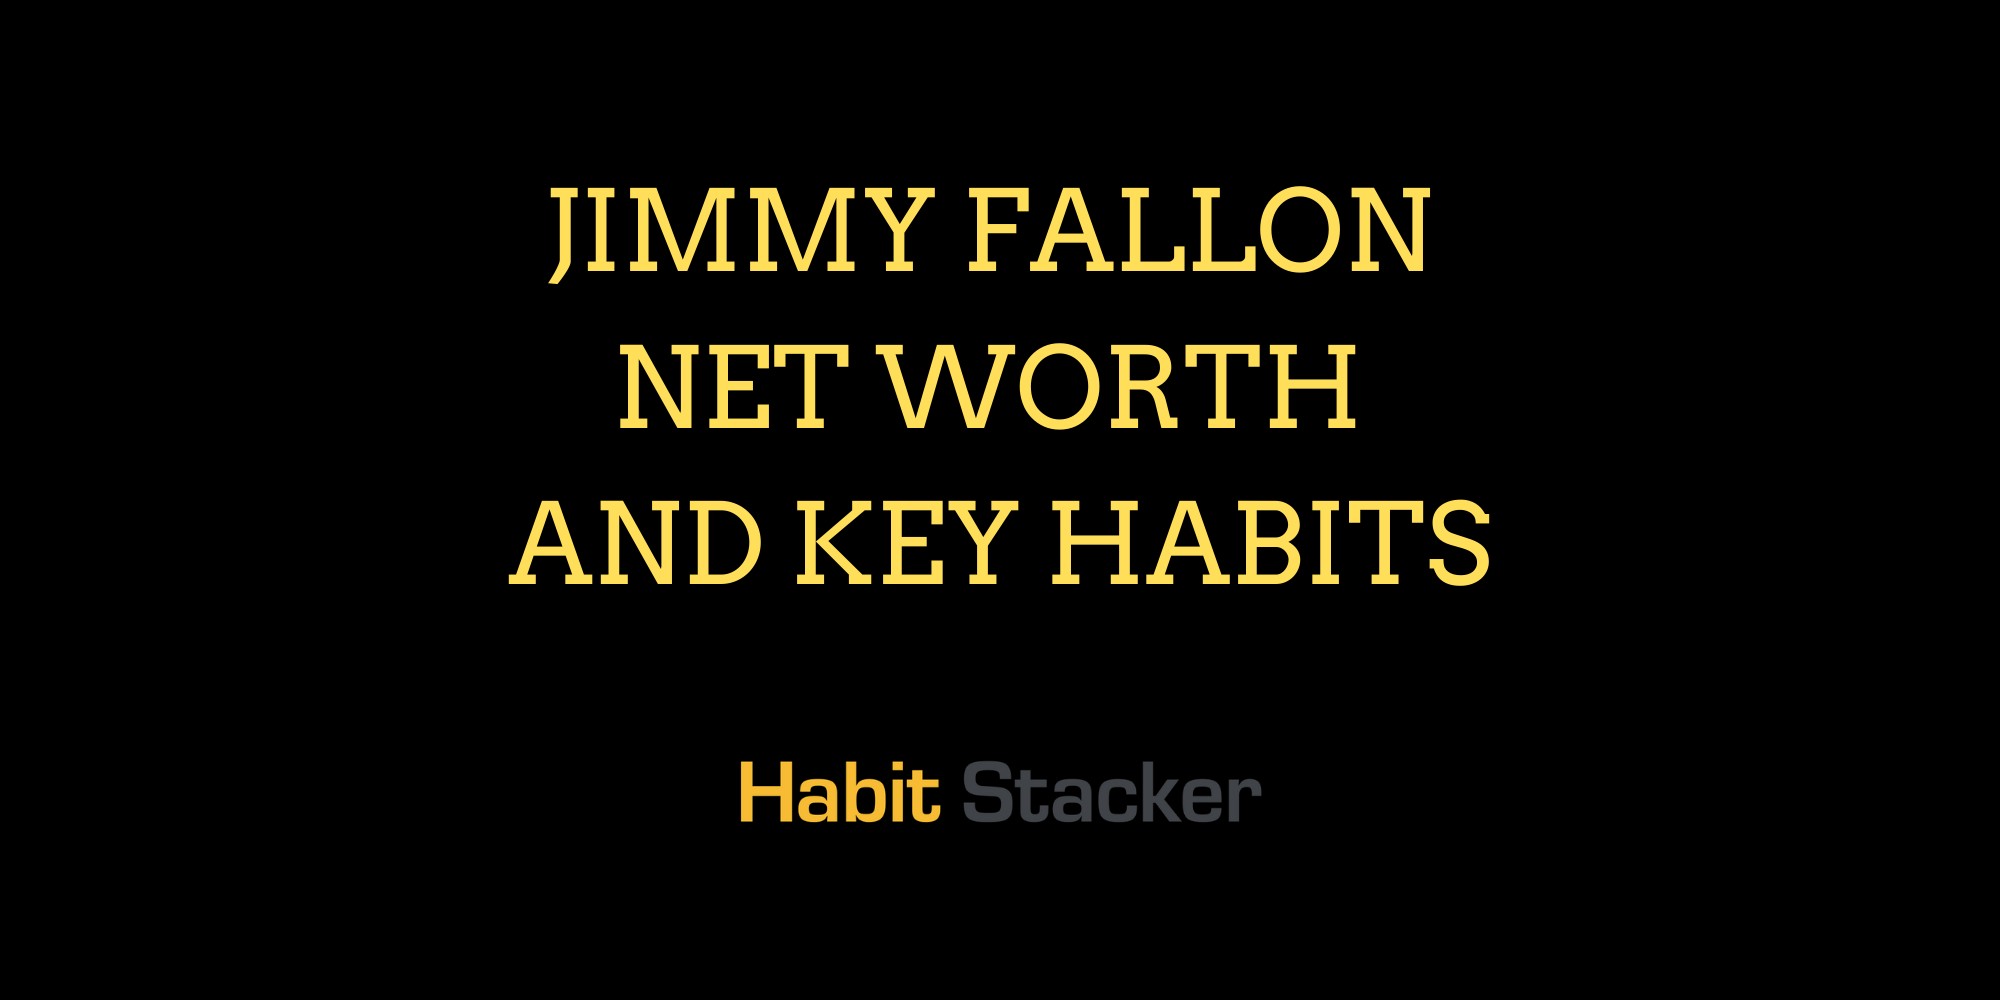 Jimmy Fallon Net Worth and Key Habits